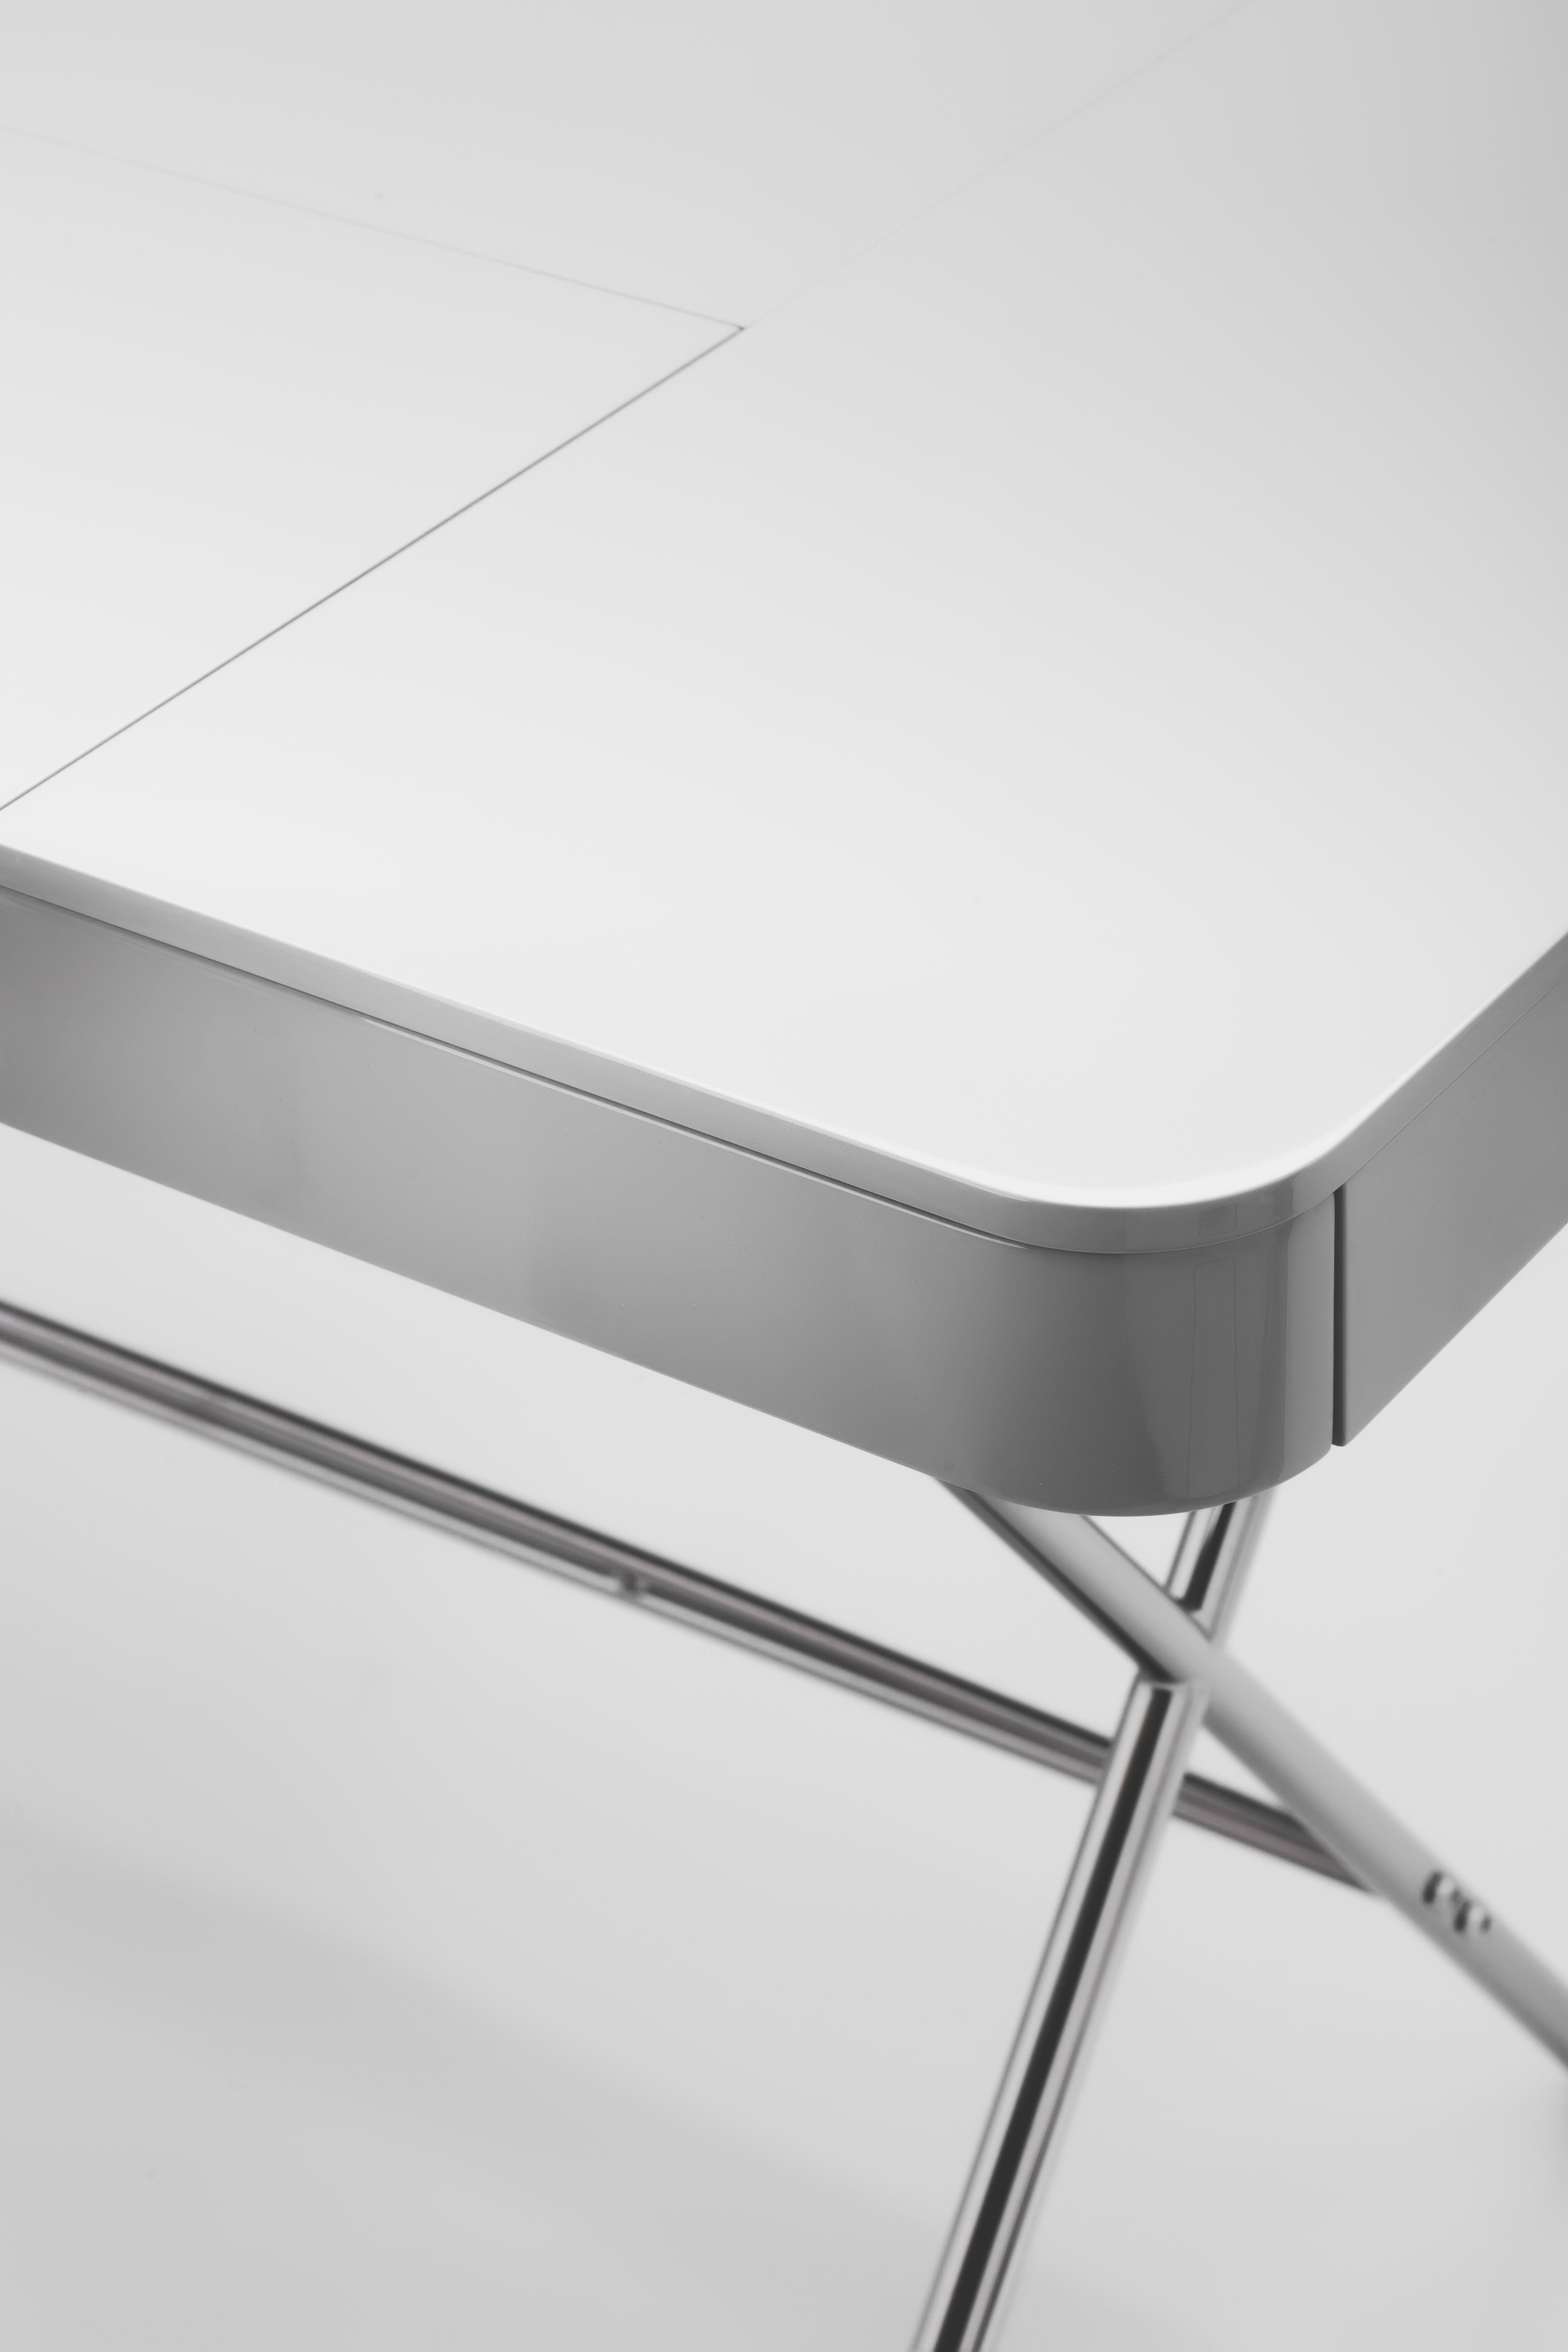 French Adentro Cosimo Desk design Marco Zanuso jr Grey glossy top & chrome base.  For Sale